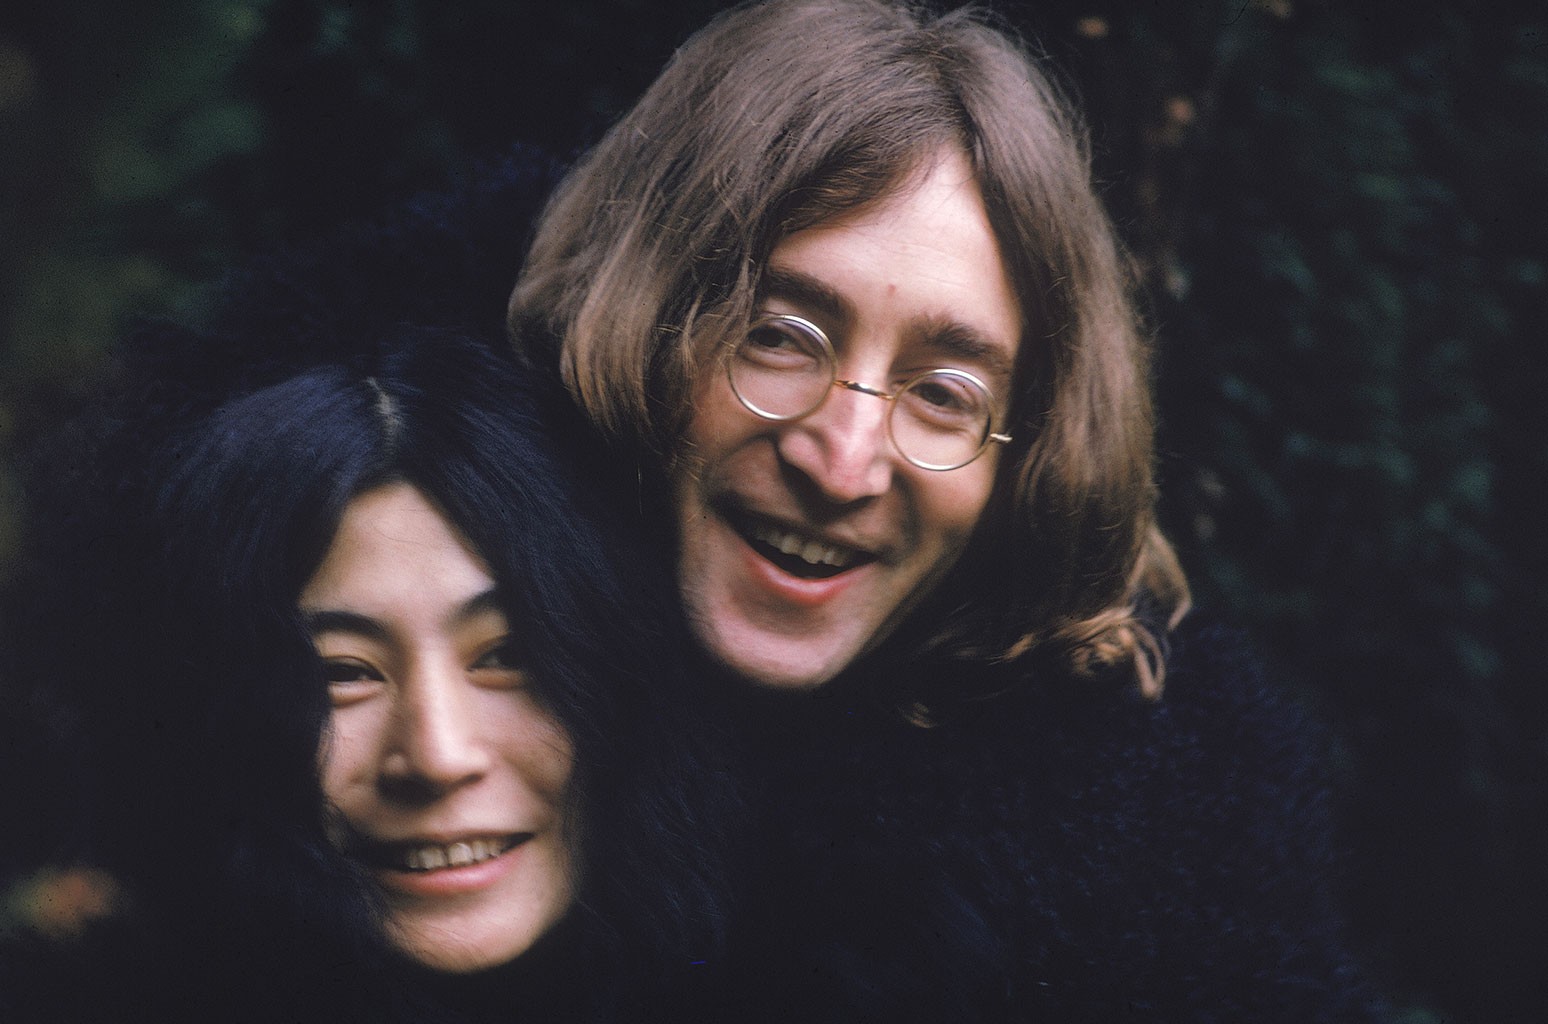 Imagine של ג'ון לנון ויוקו אונו הושמע שוב בפתיחת המשחקים האולימפיים בטוקיו